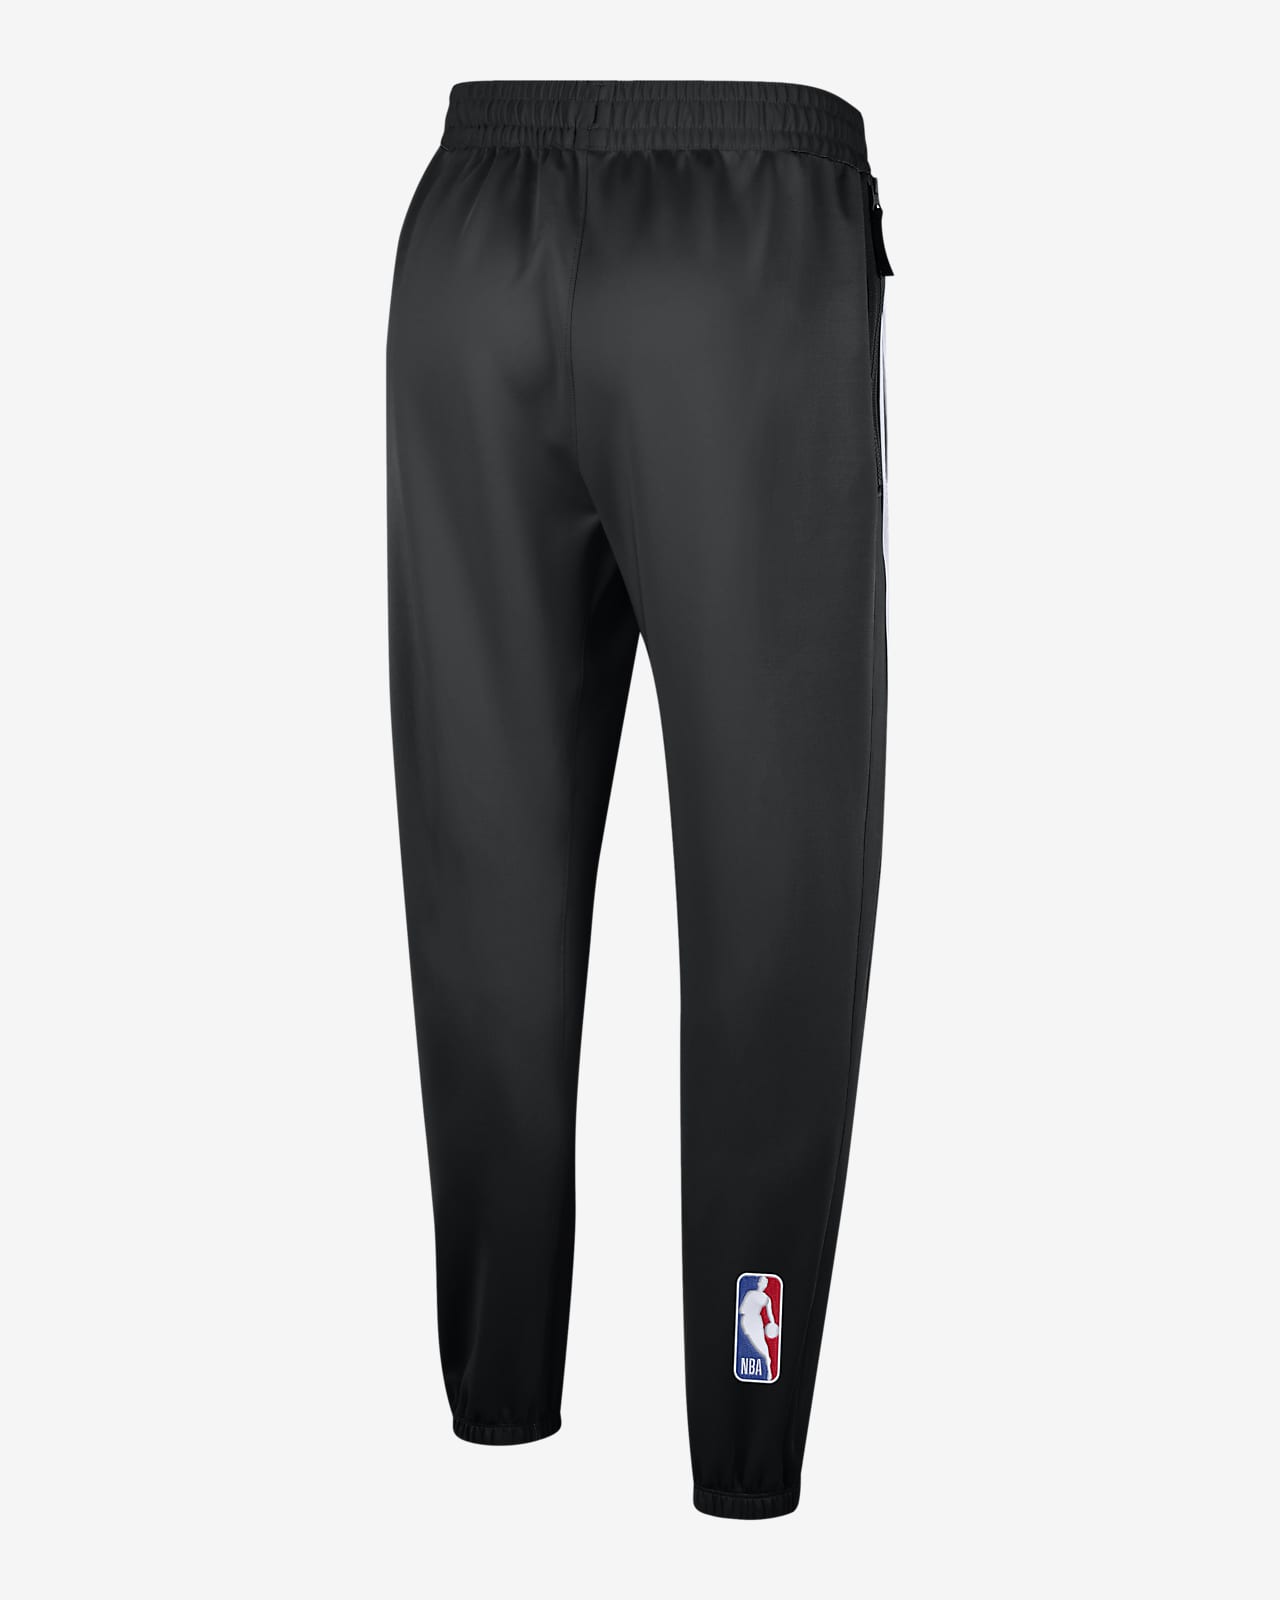 Men's Nike Dri-Fit basketball warm up pants. Size: L. Color: White